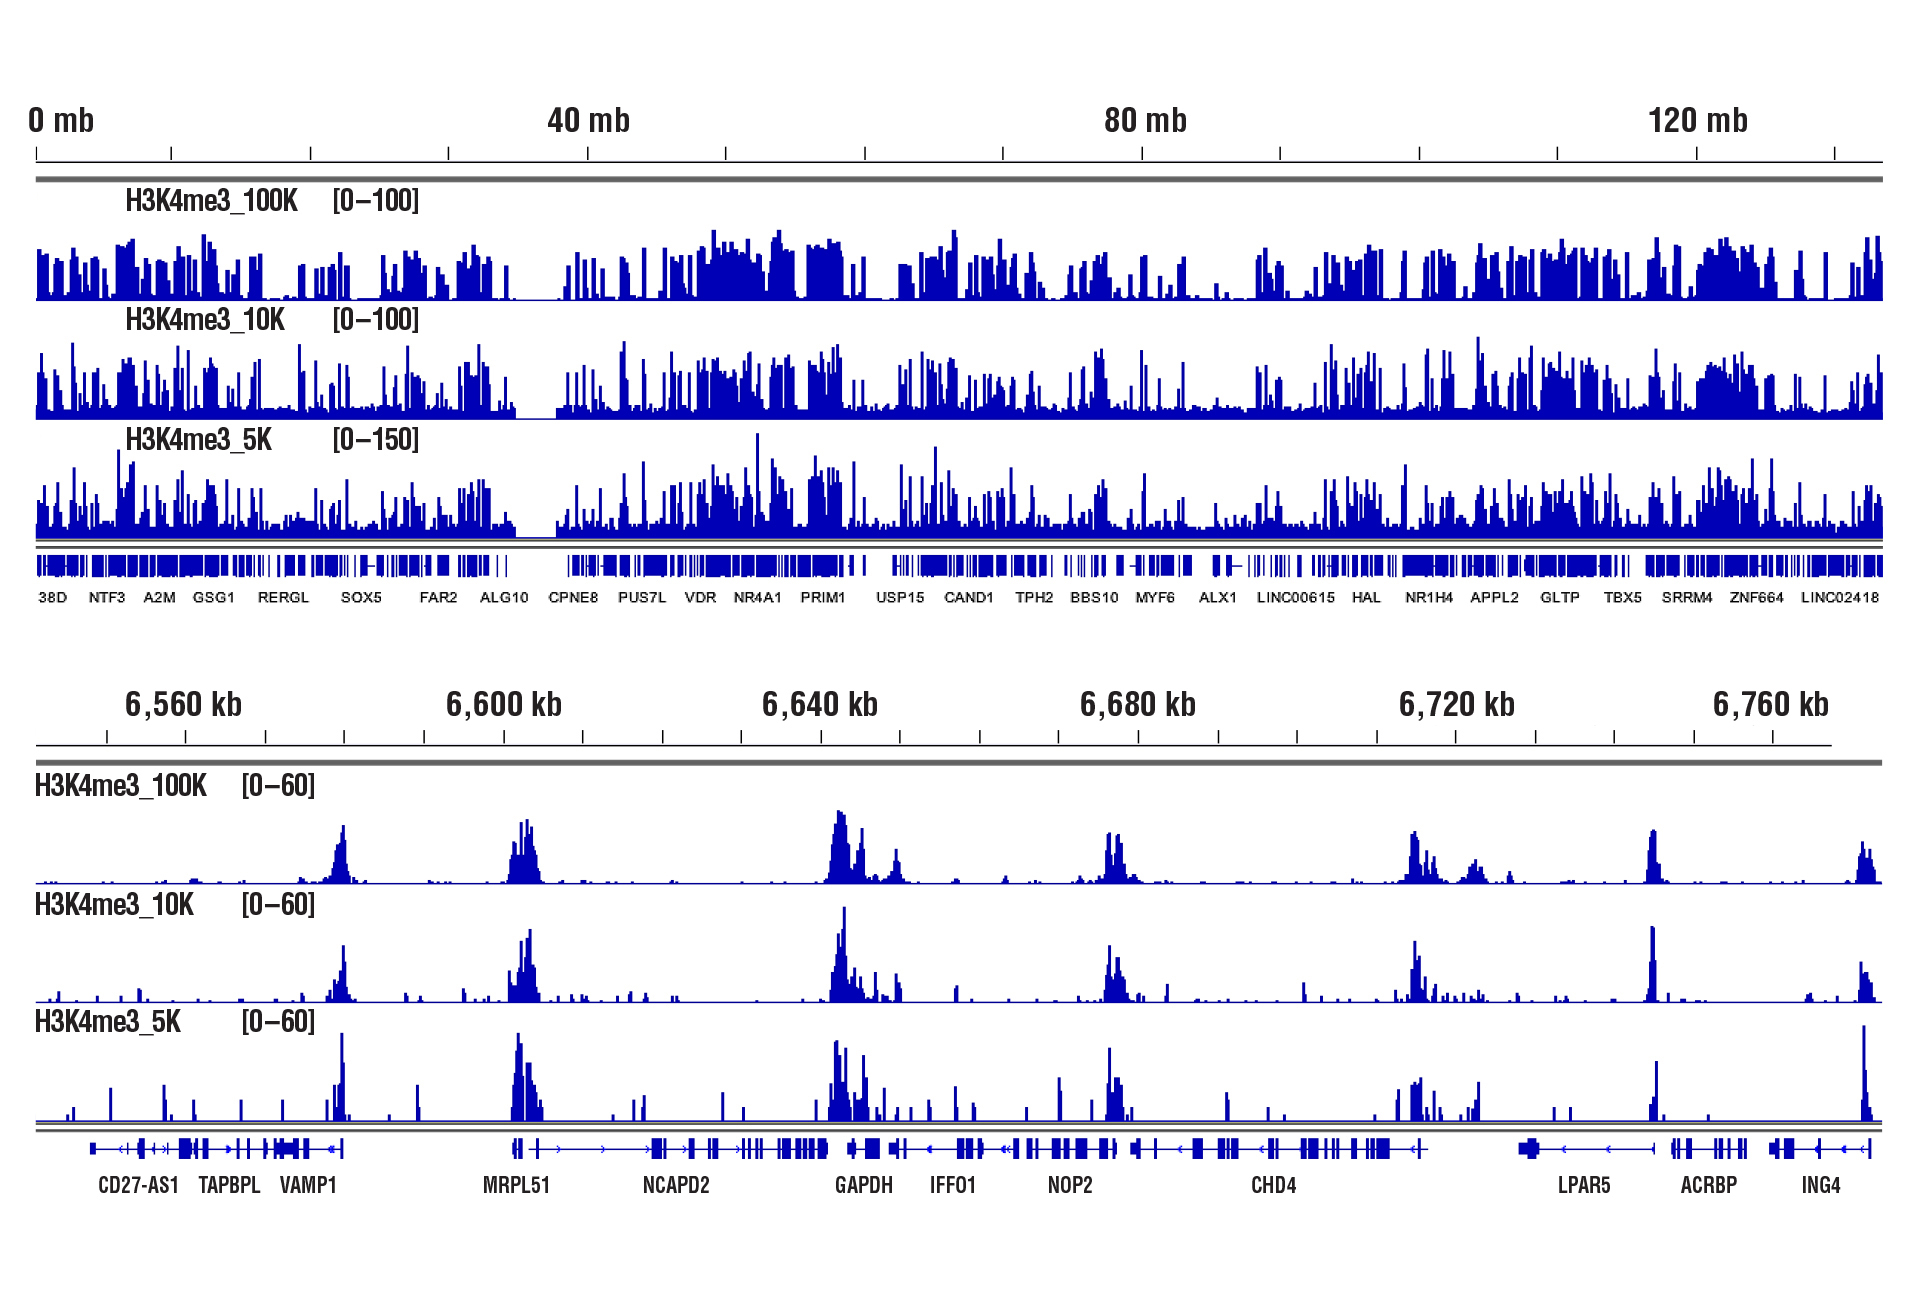 H3K4me3 NGS data for 100K, 10K & 5K cells